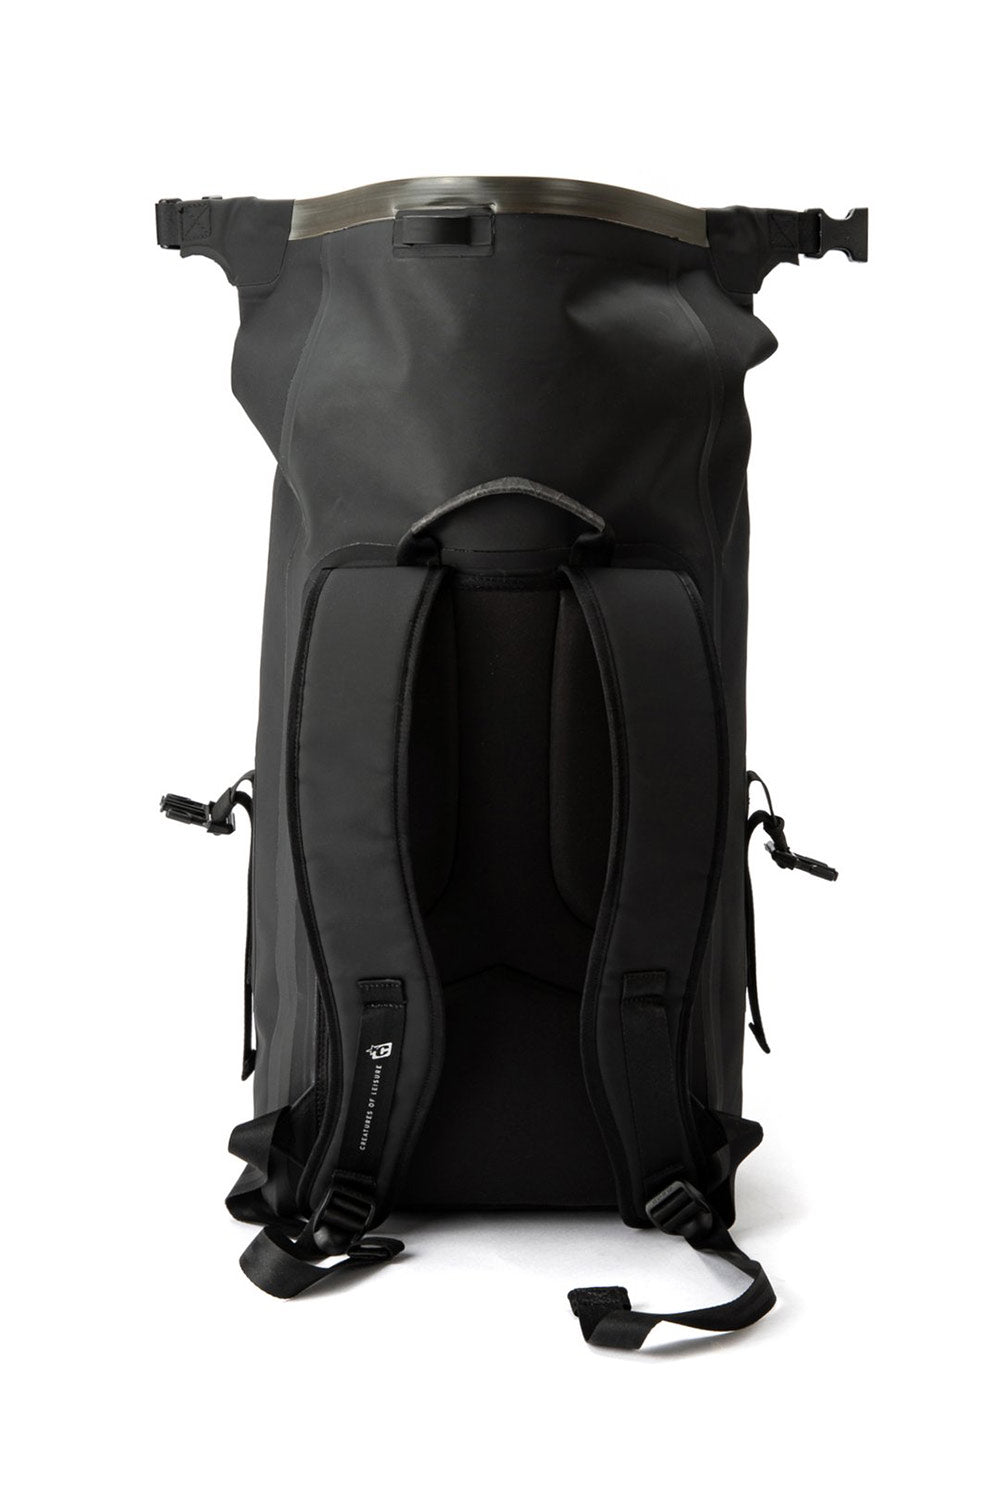 Creatures of Leisure S-Lock Dry Bag 35L - Black